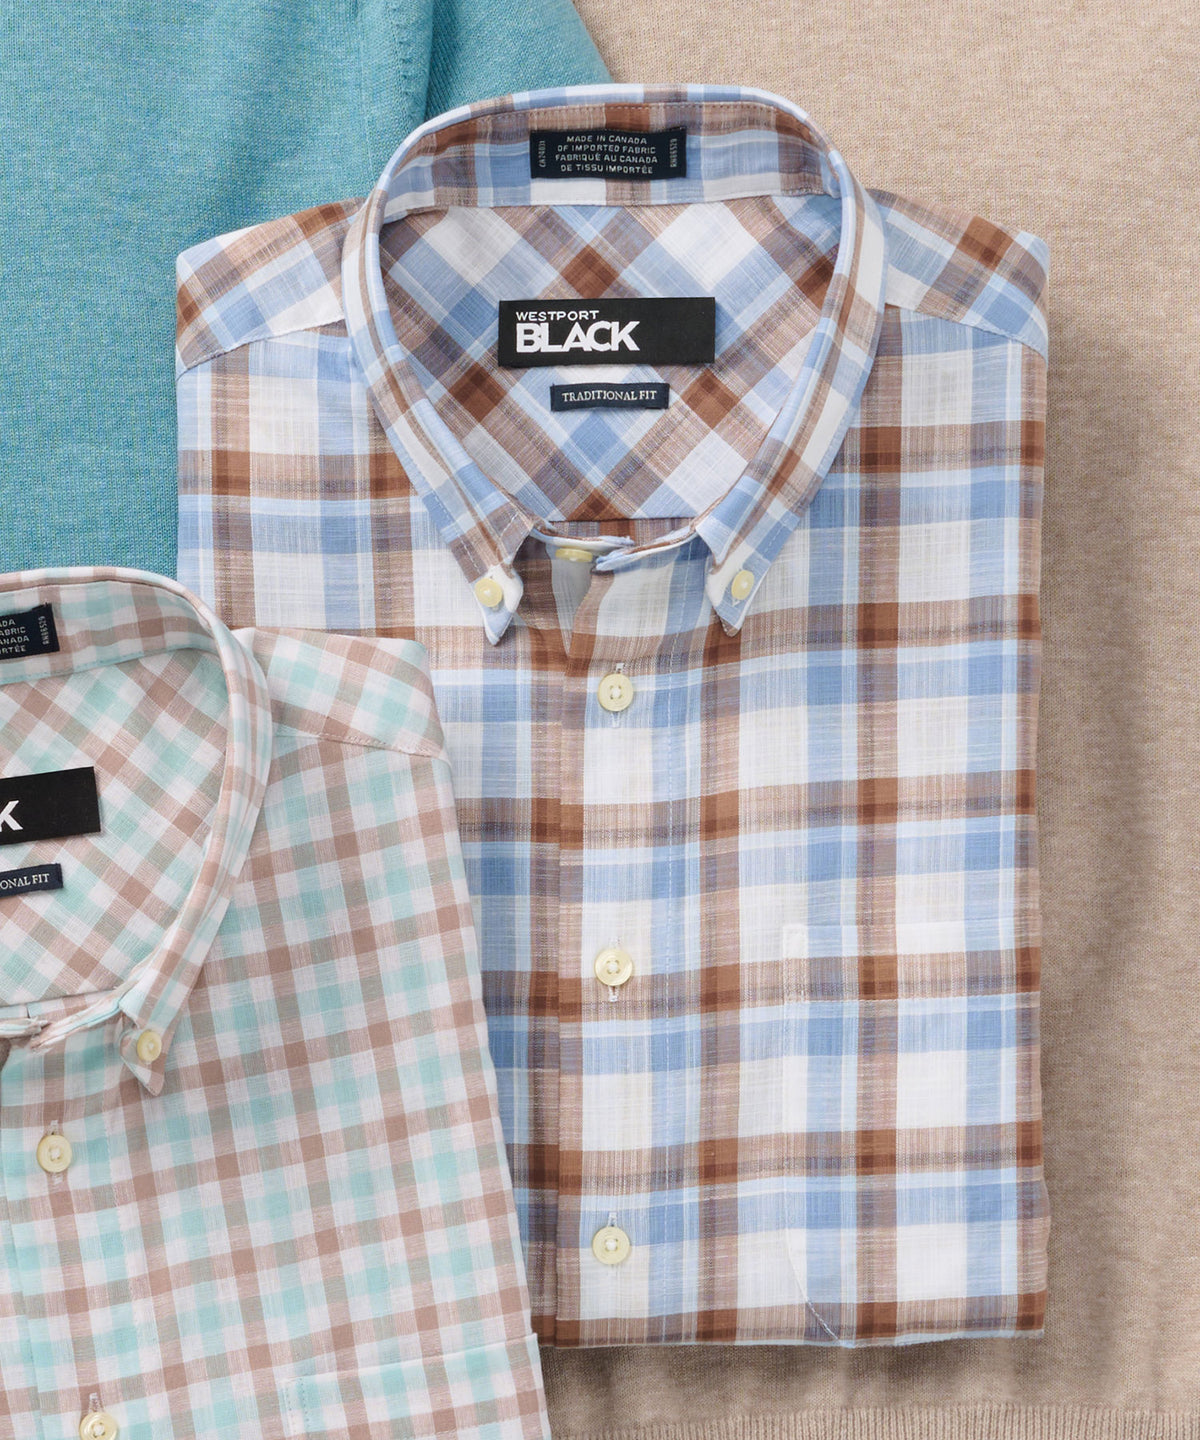 Westport Black Long Sleeve Plaid & Check Button-Down Collar Sport Shirt, Big & Tall